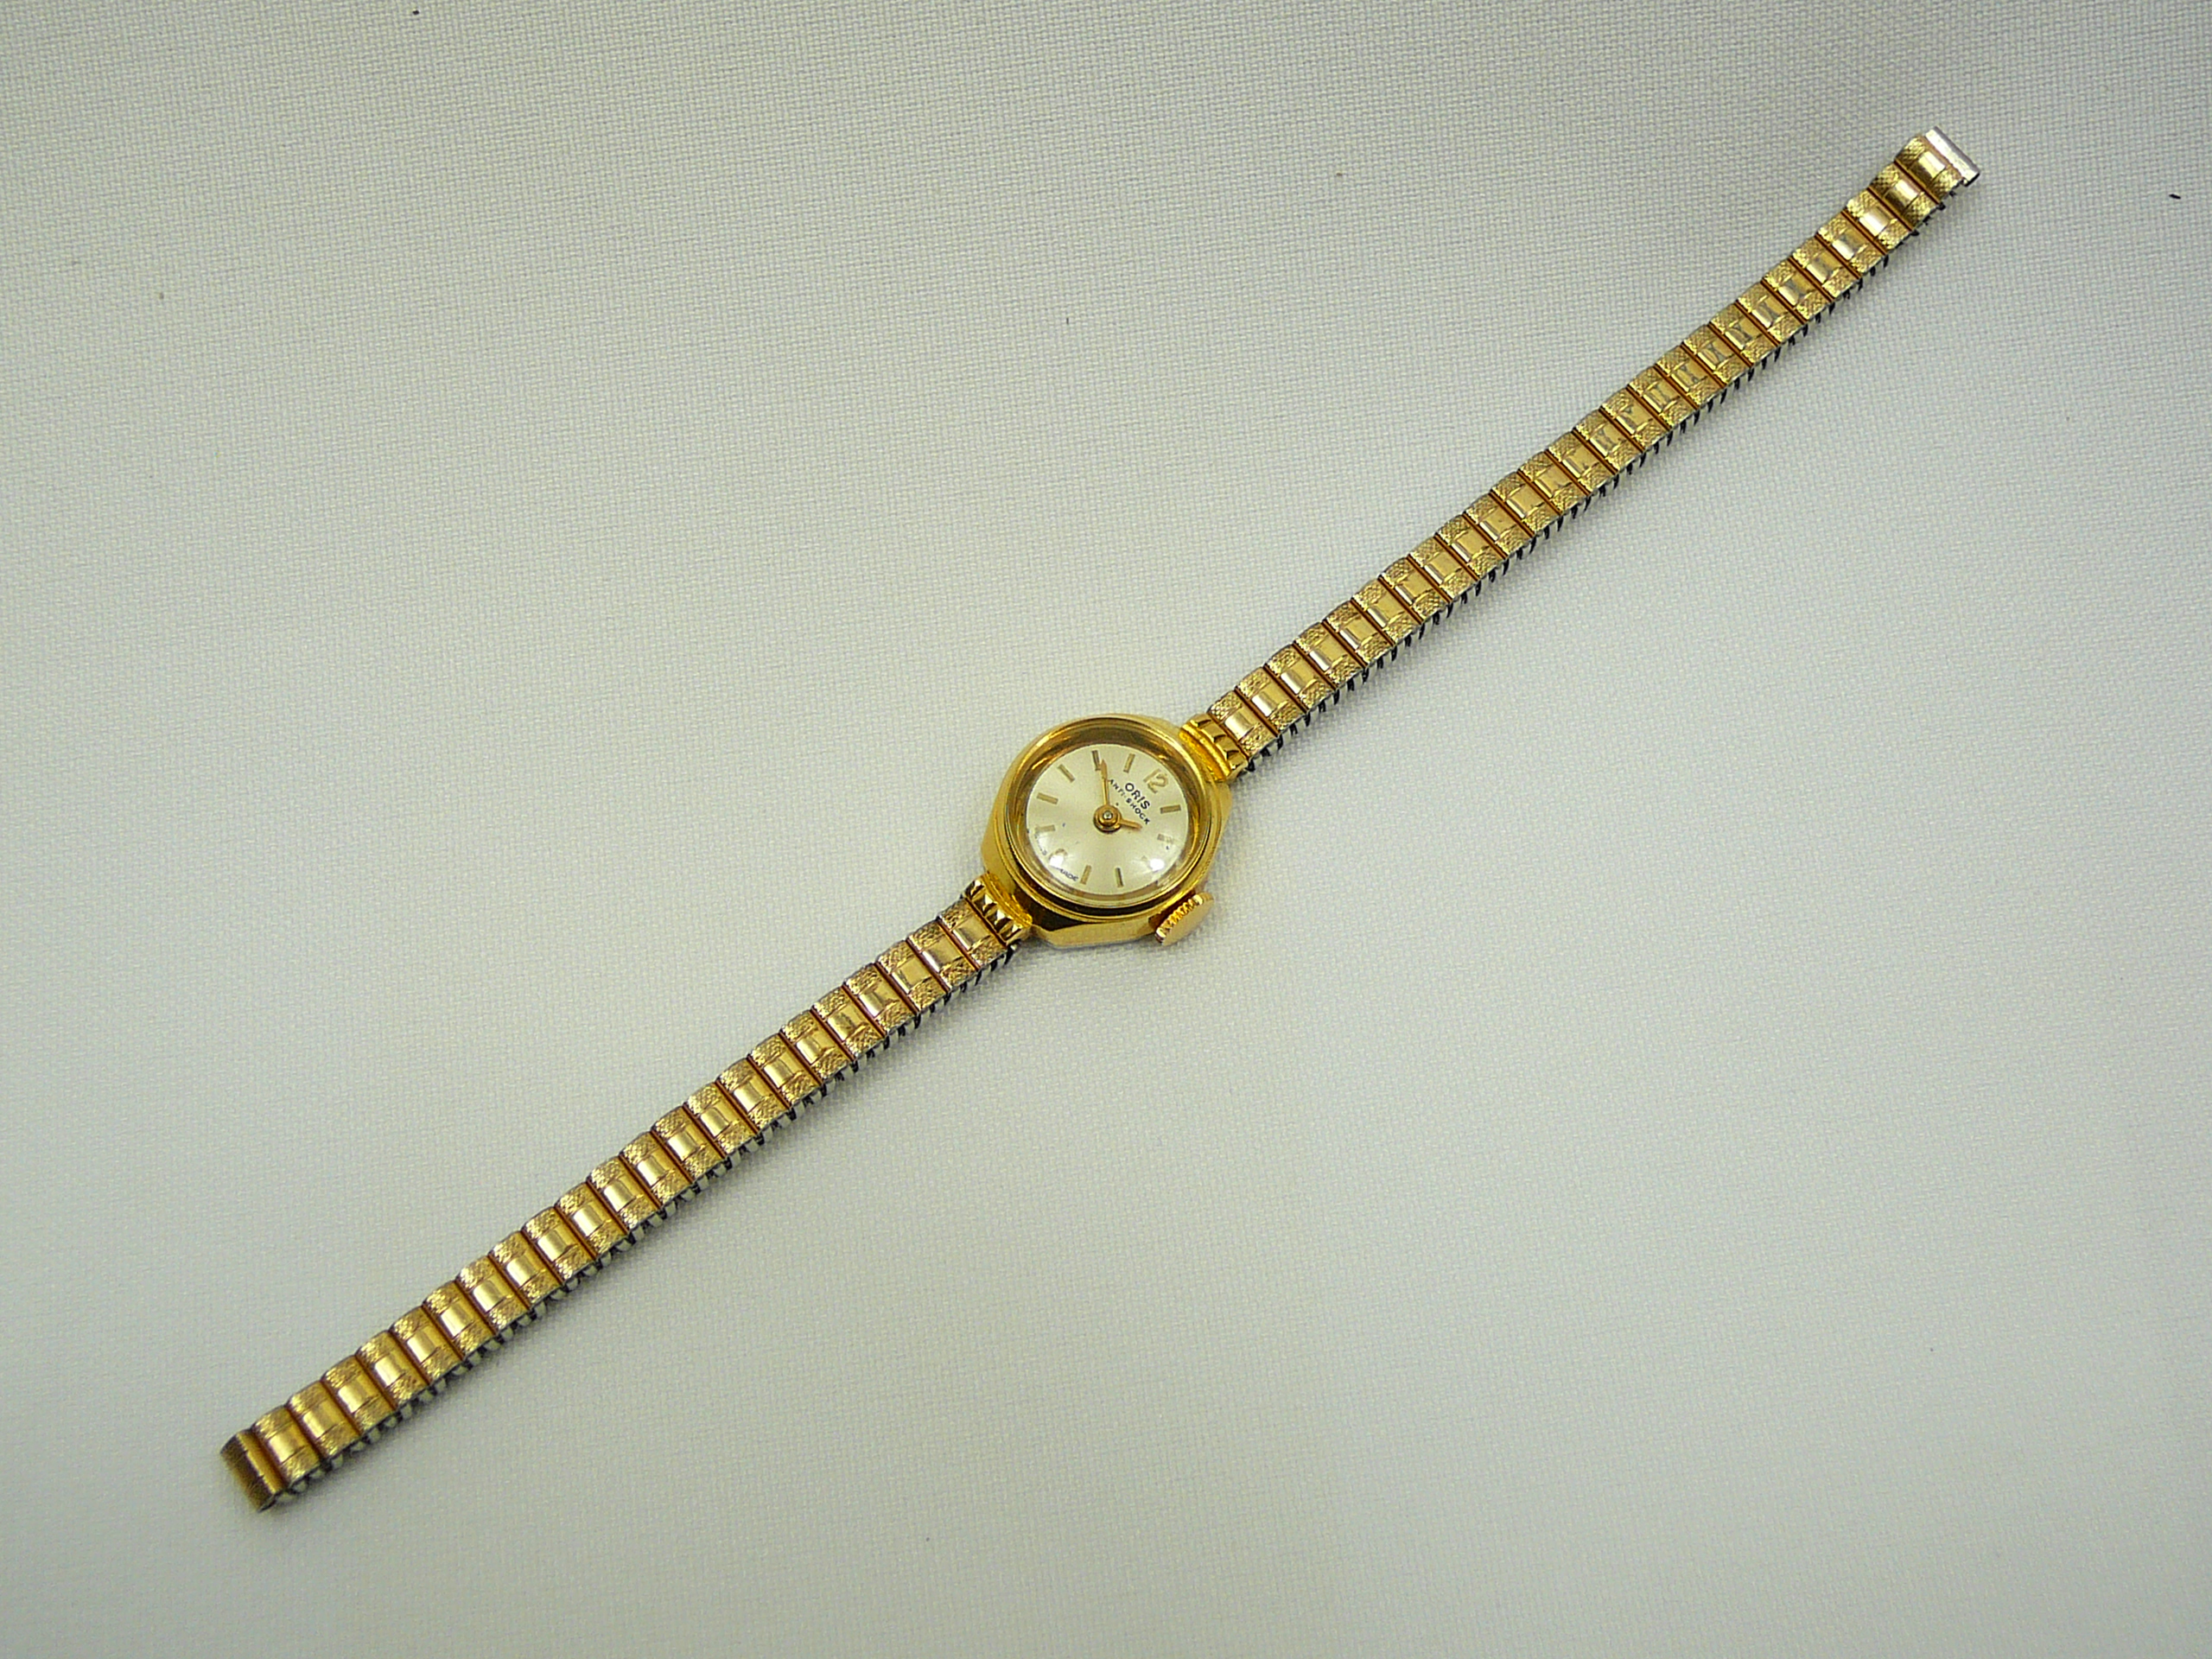 Ladies Vintage Oris Wristwatch - Image 2 of 3